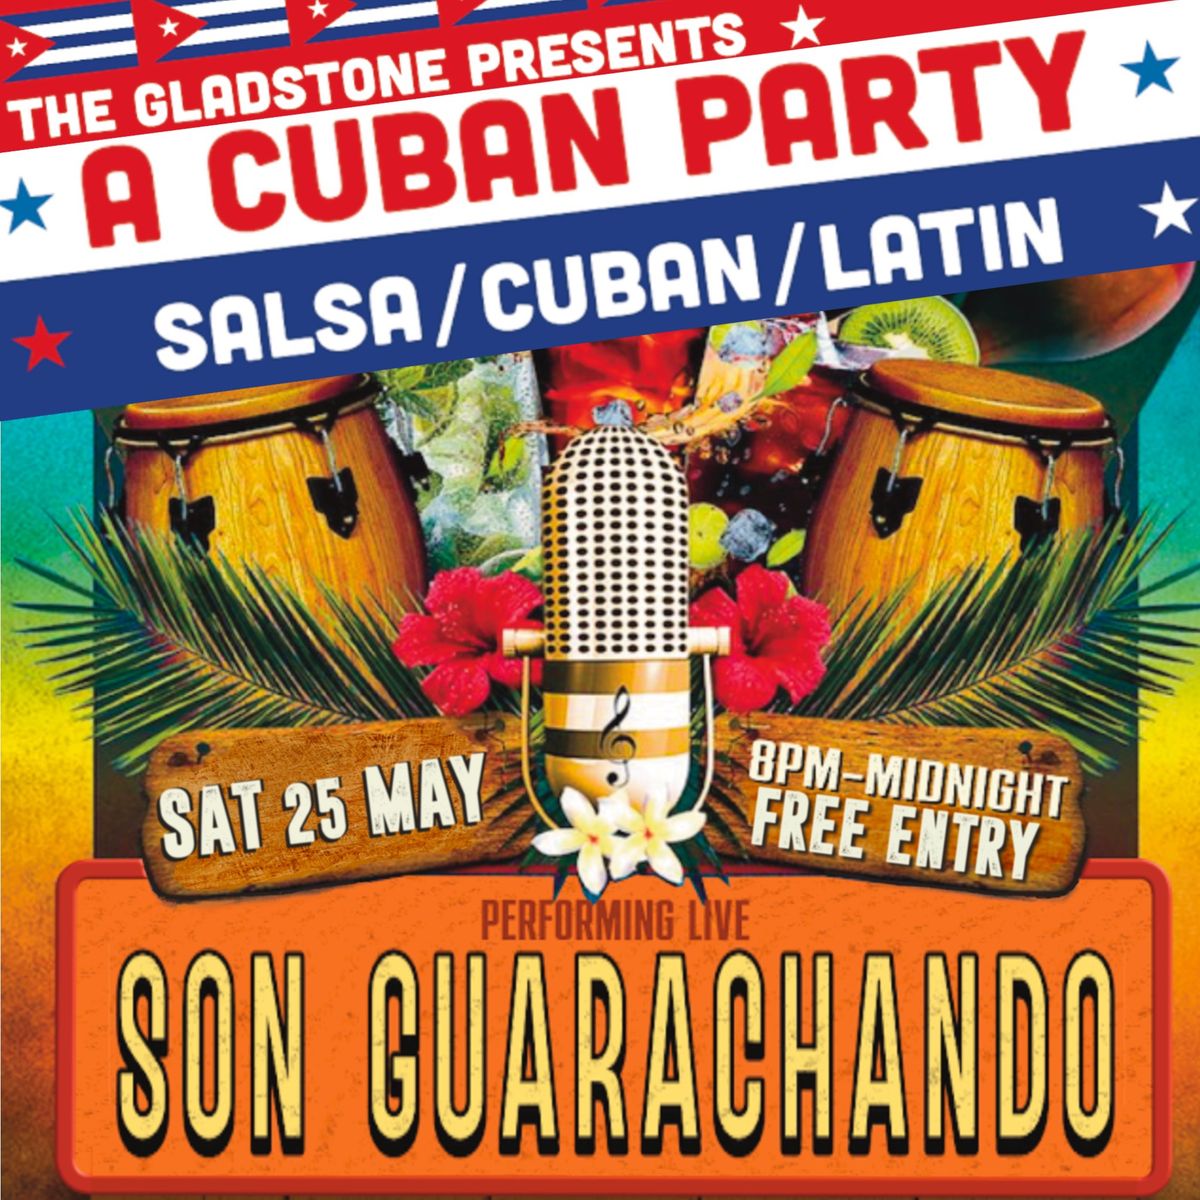 Cuban Party feat Son Guarachando (Live) \/\/ Free Entry 